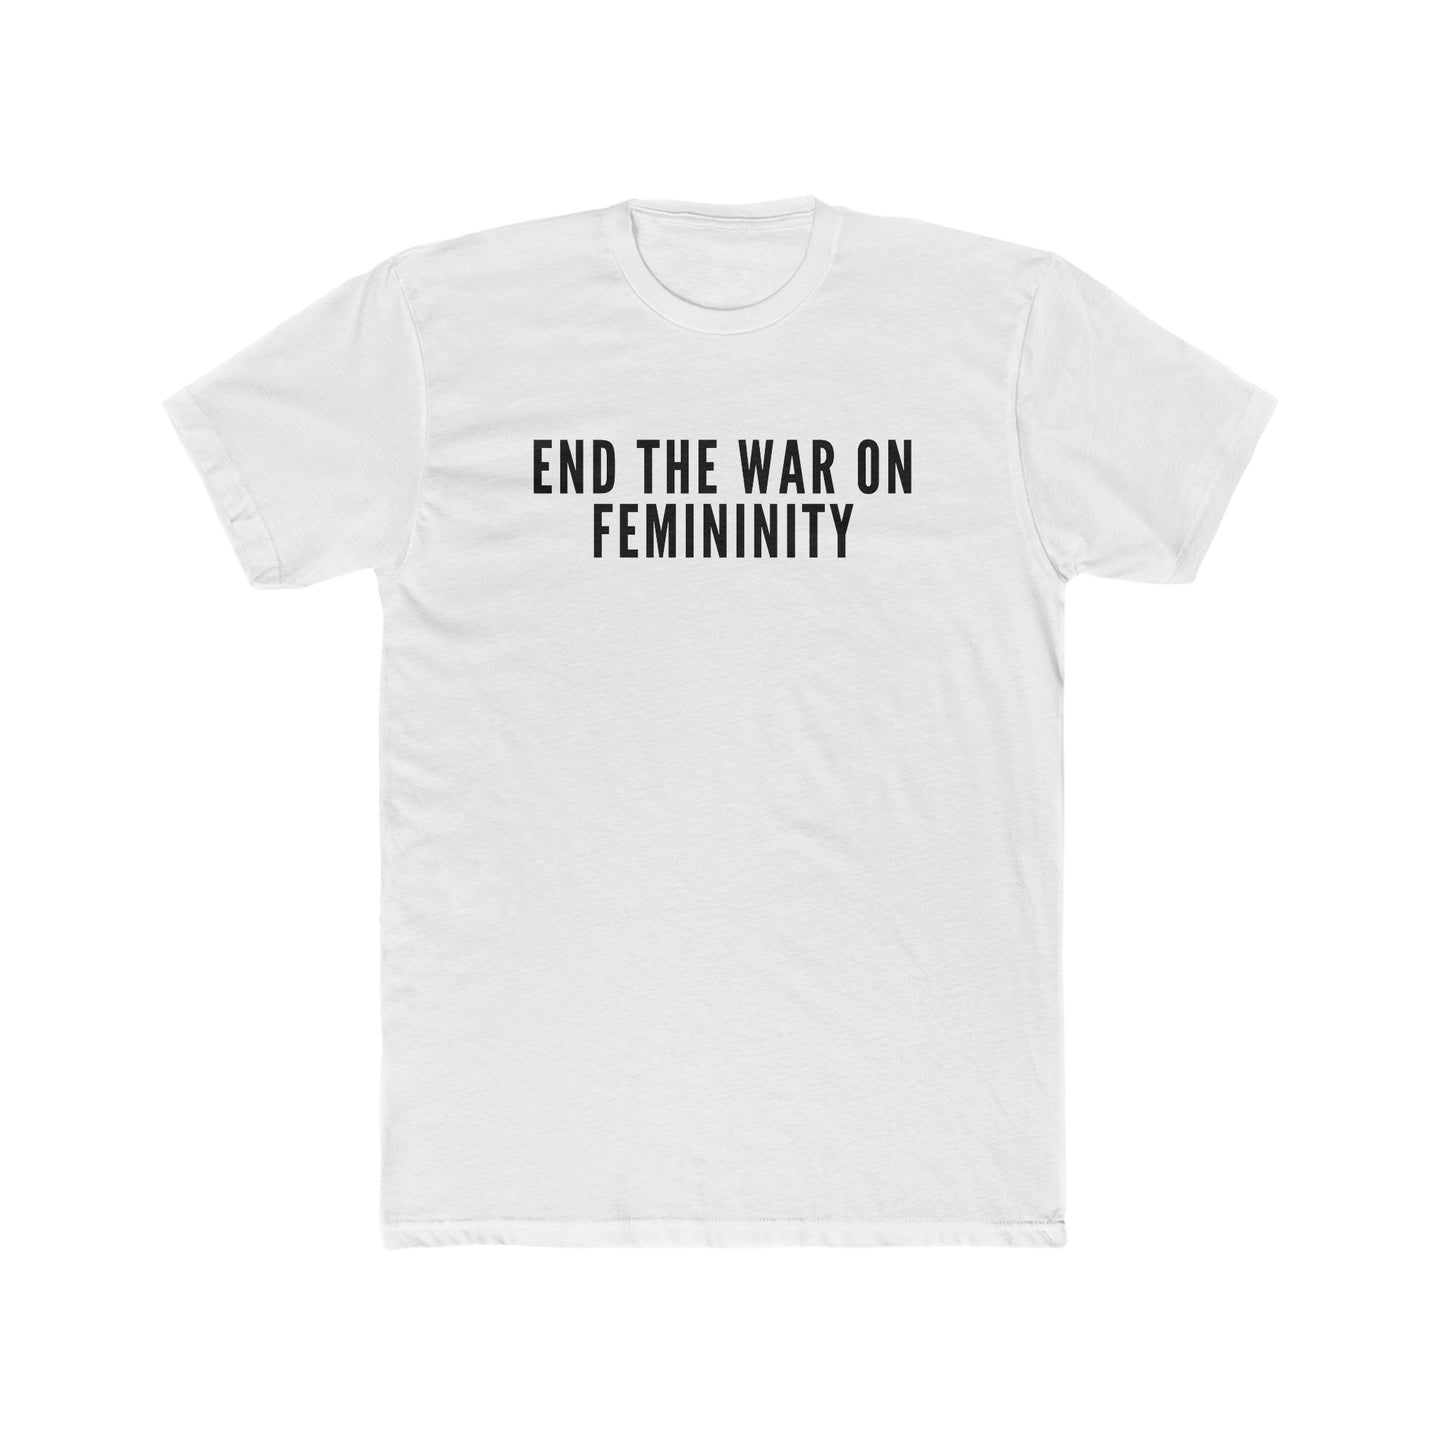 End the War on Femininity T-Shirt